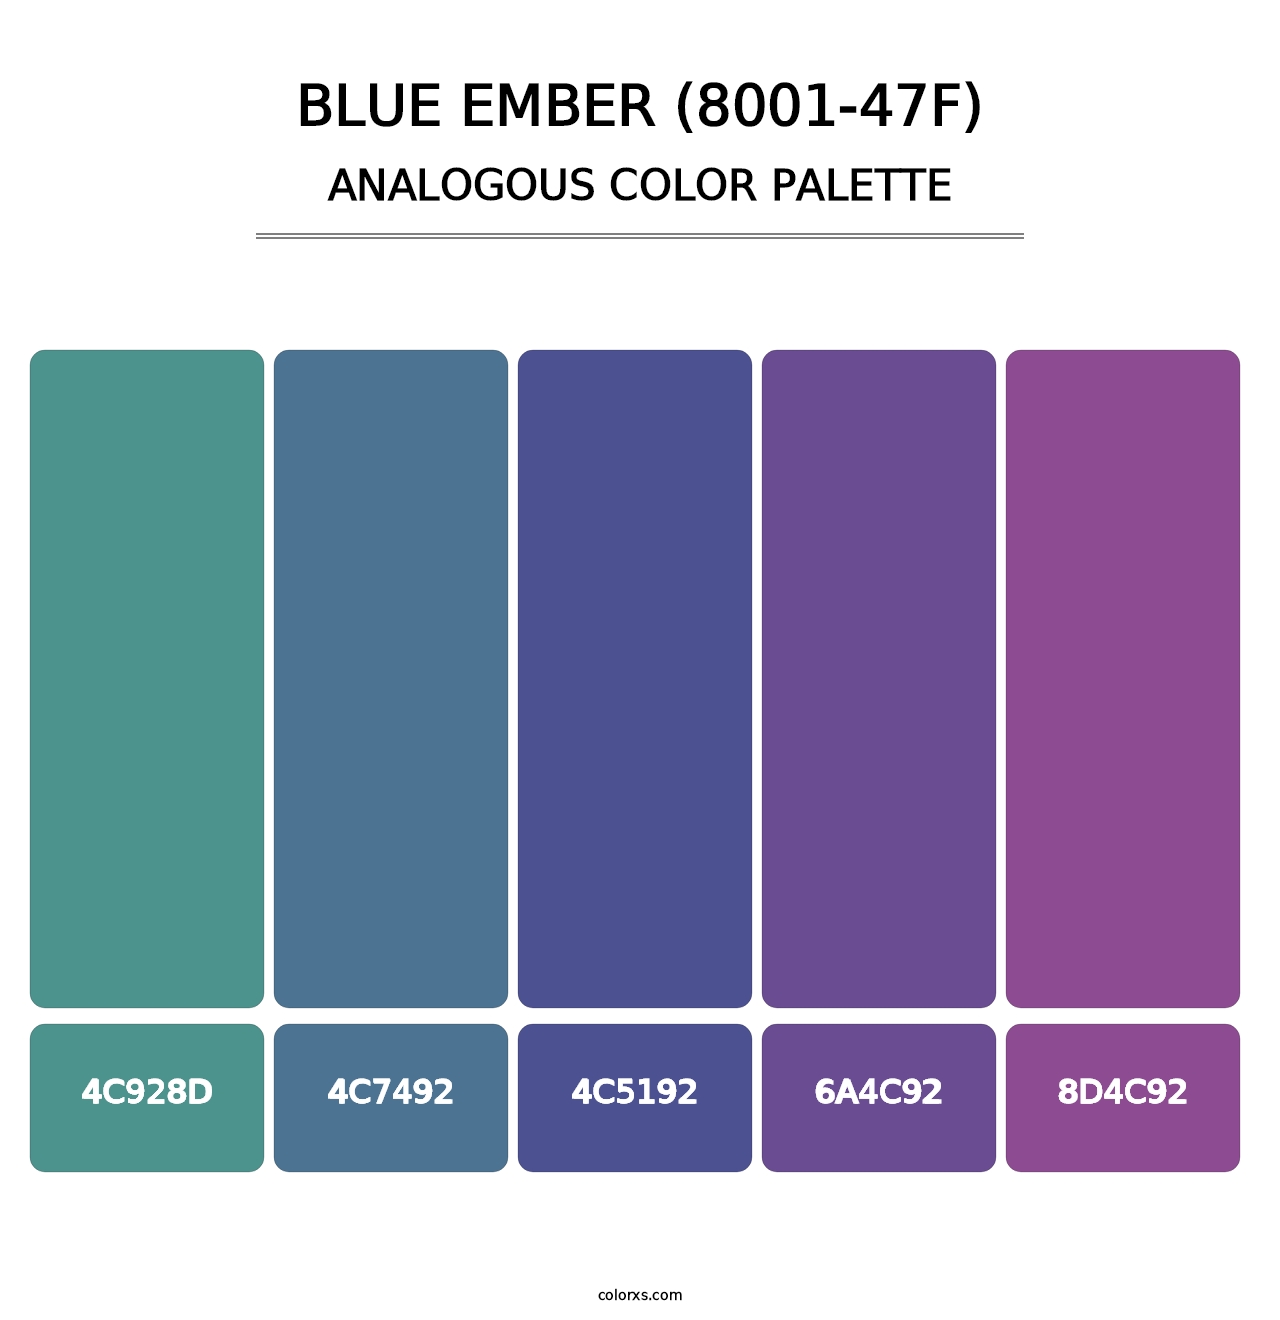 Blue Ember (8001-47F) - Analogous Color Palette